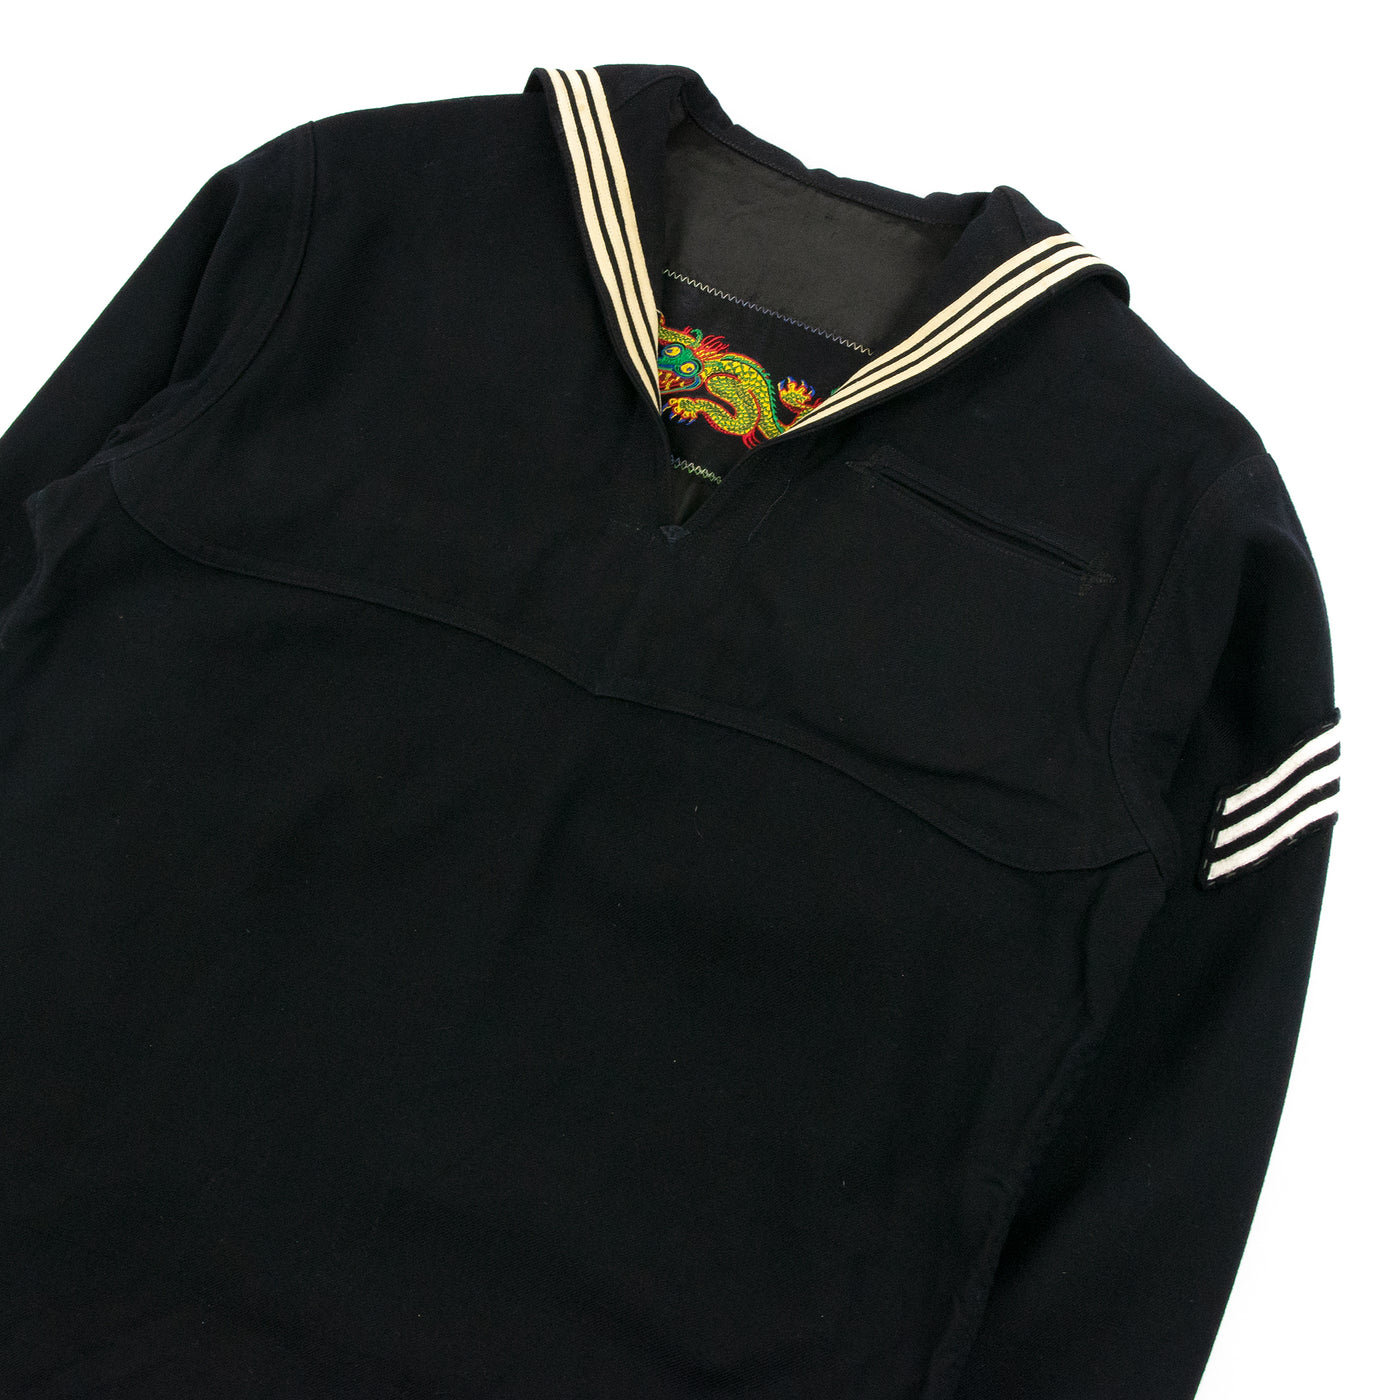 Vintage 1960 Vietnam War Era US Navy Cracker Jack Military Wool Shirt Collar